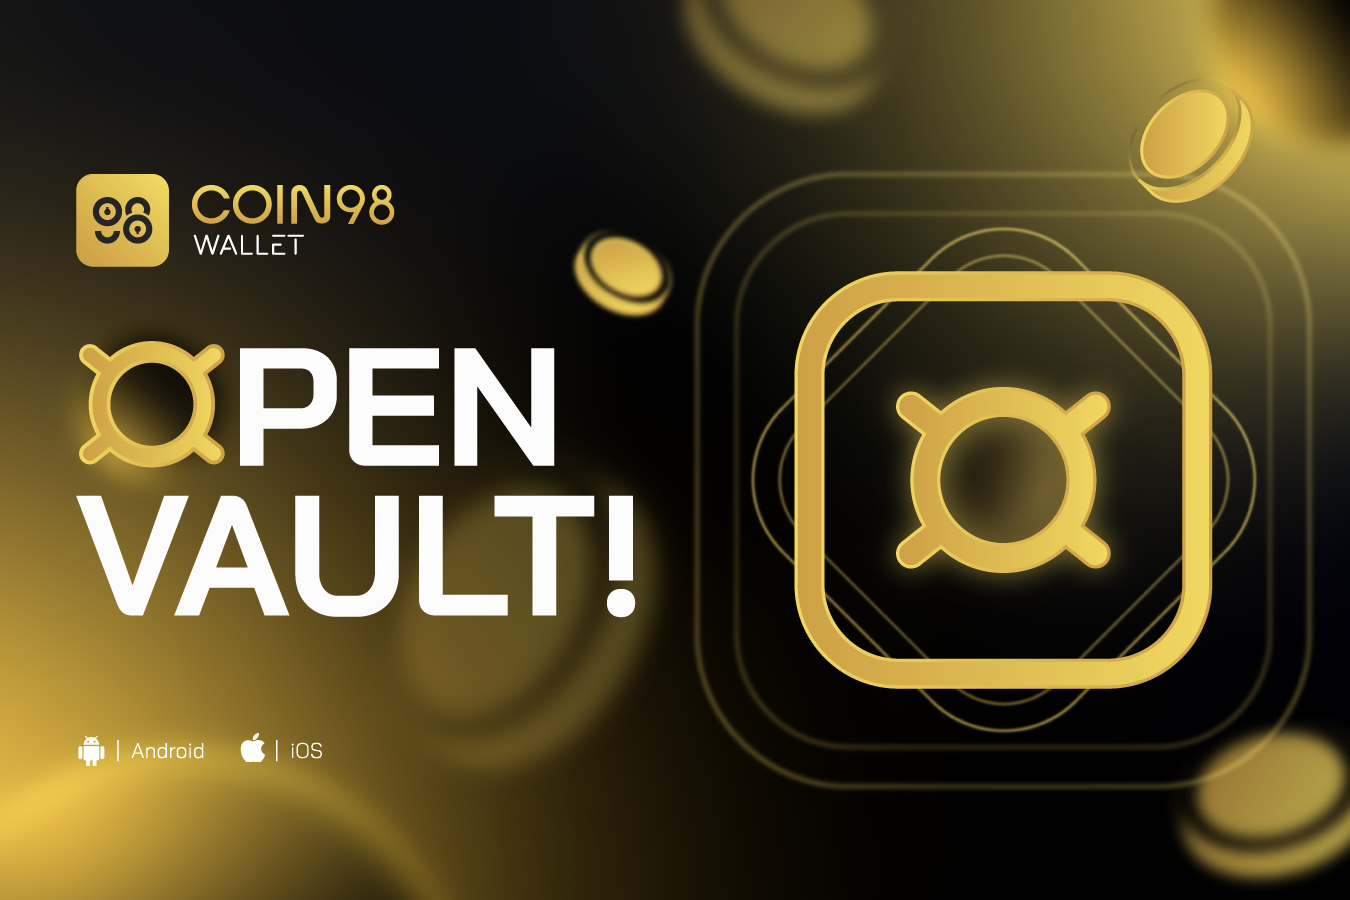 Open Coin98 Vault!